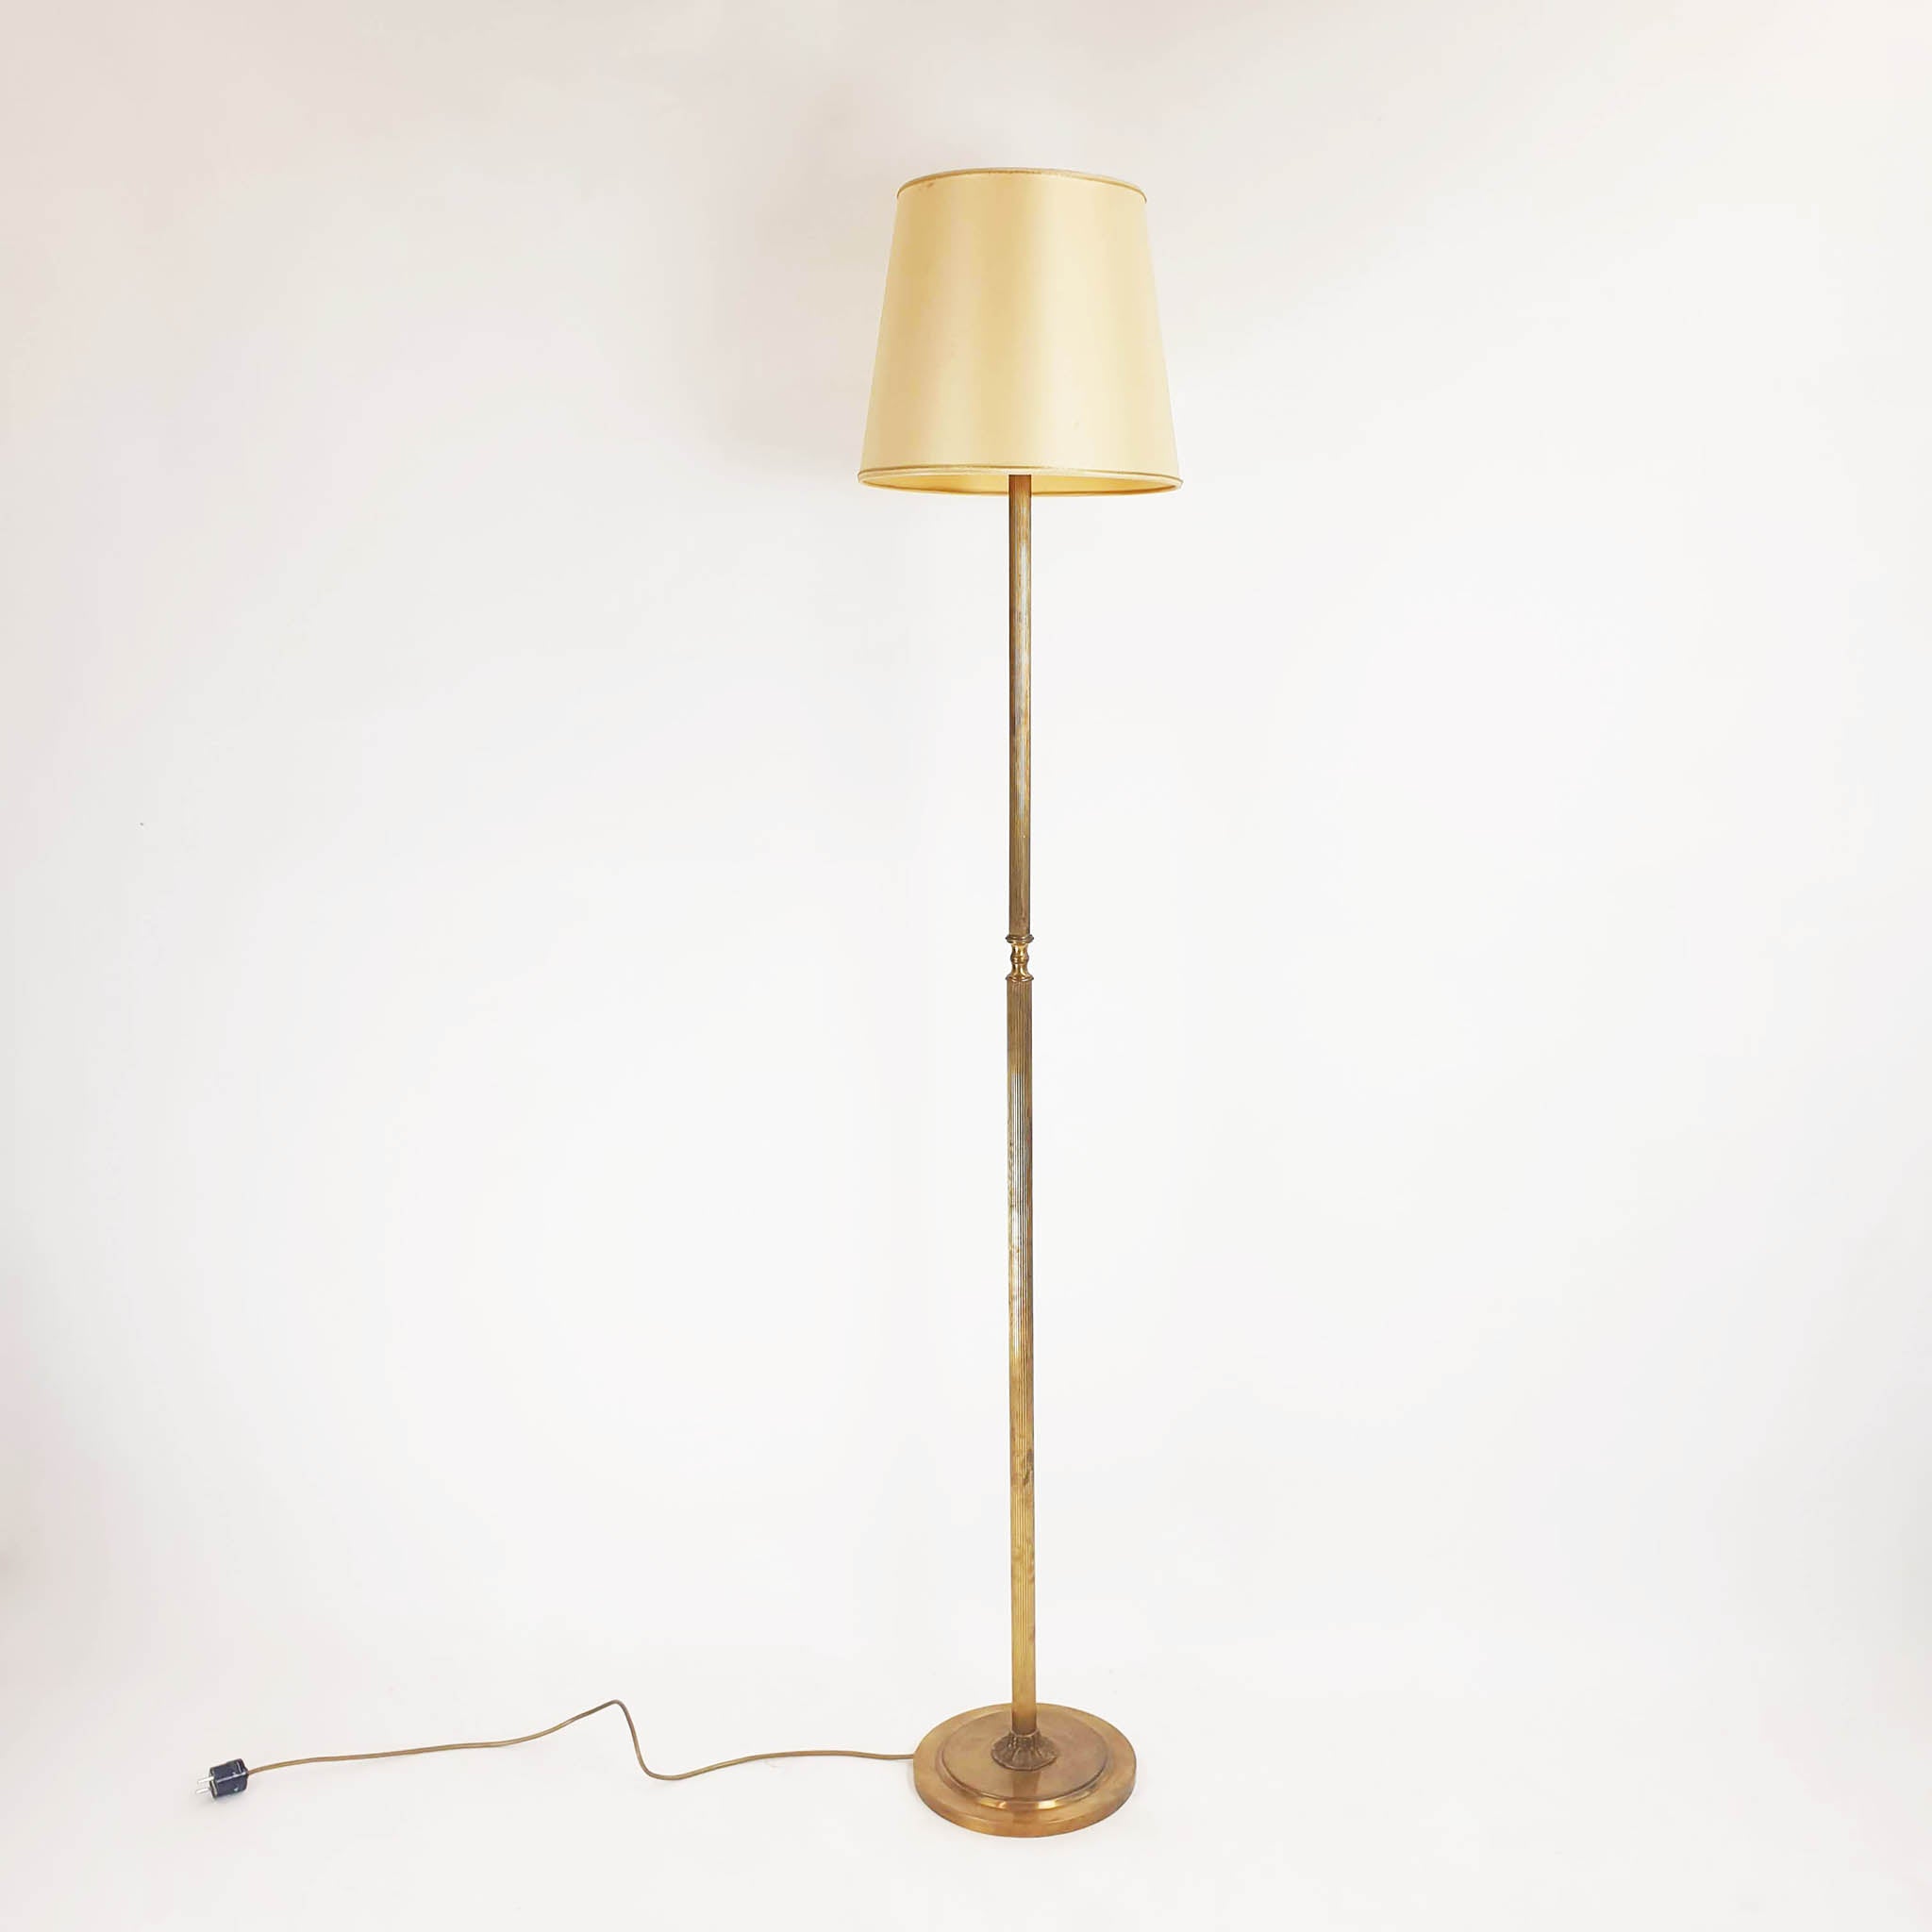 Vintage Italian brass floor lamp